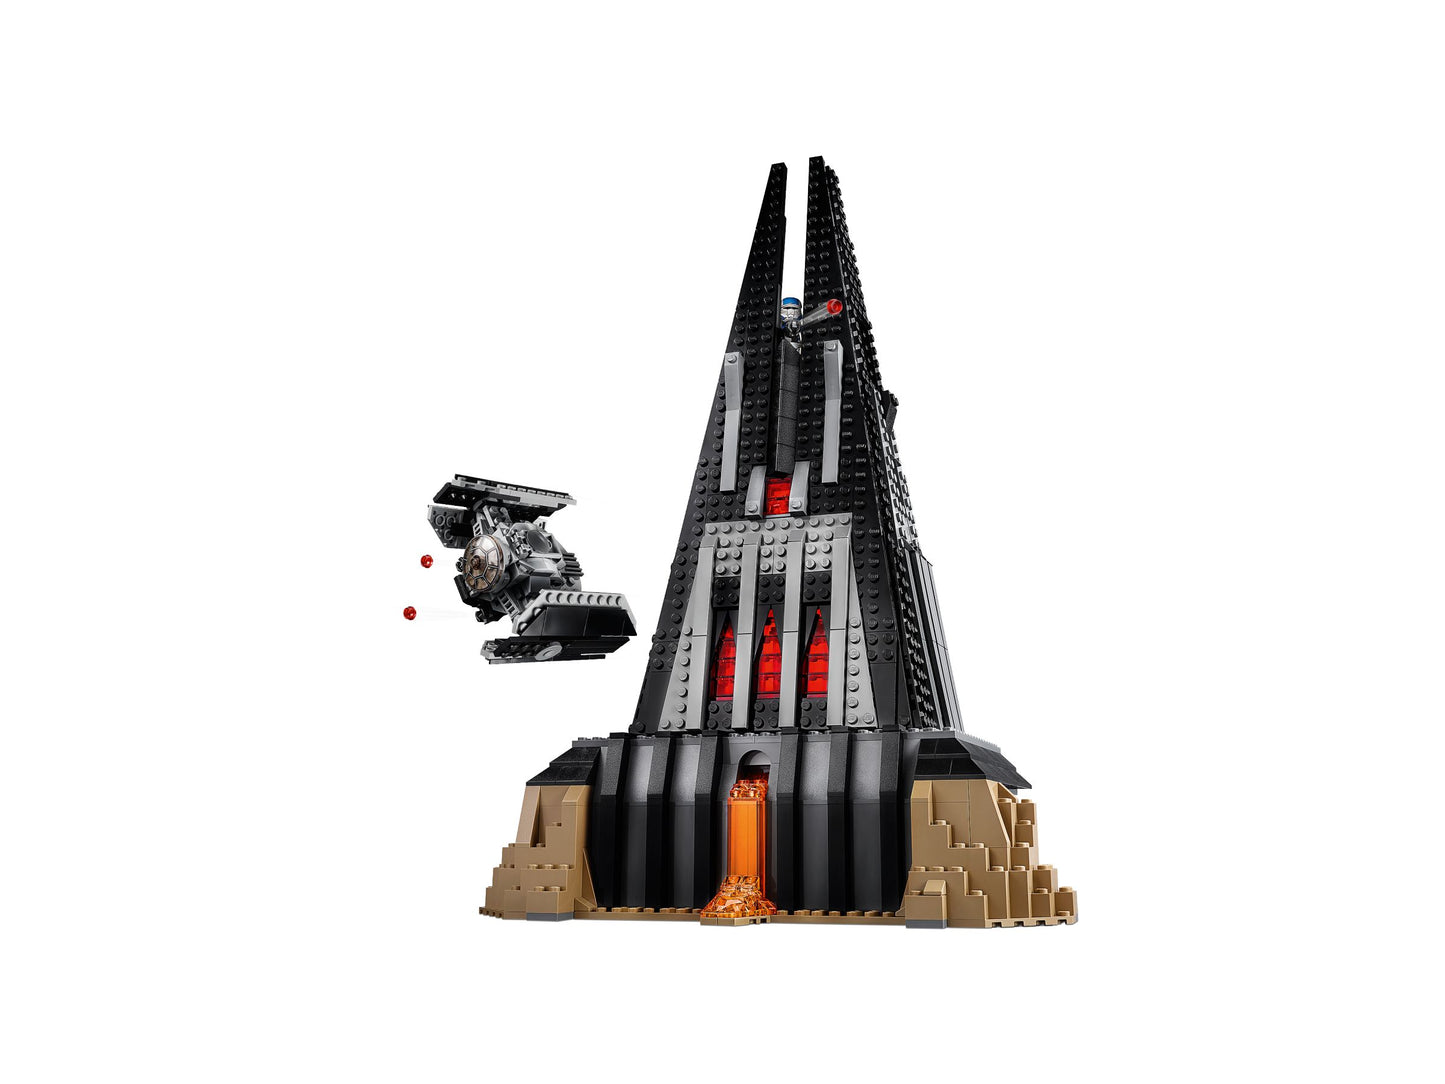 Star Wars 75251 Darth Vaders Festung